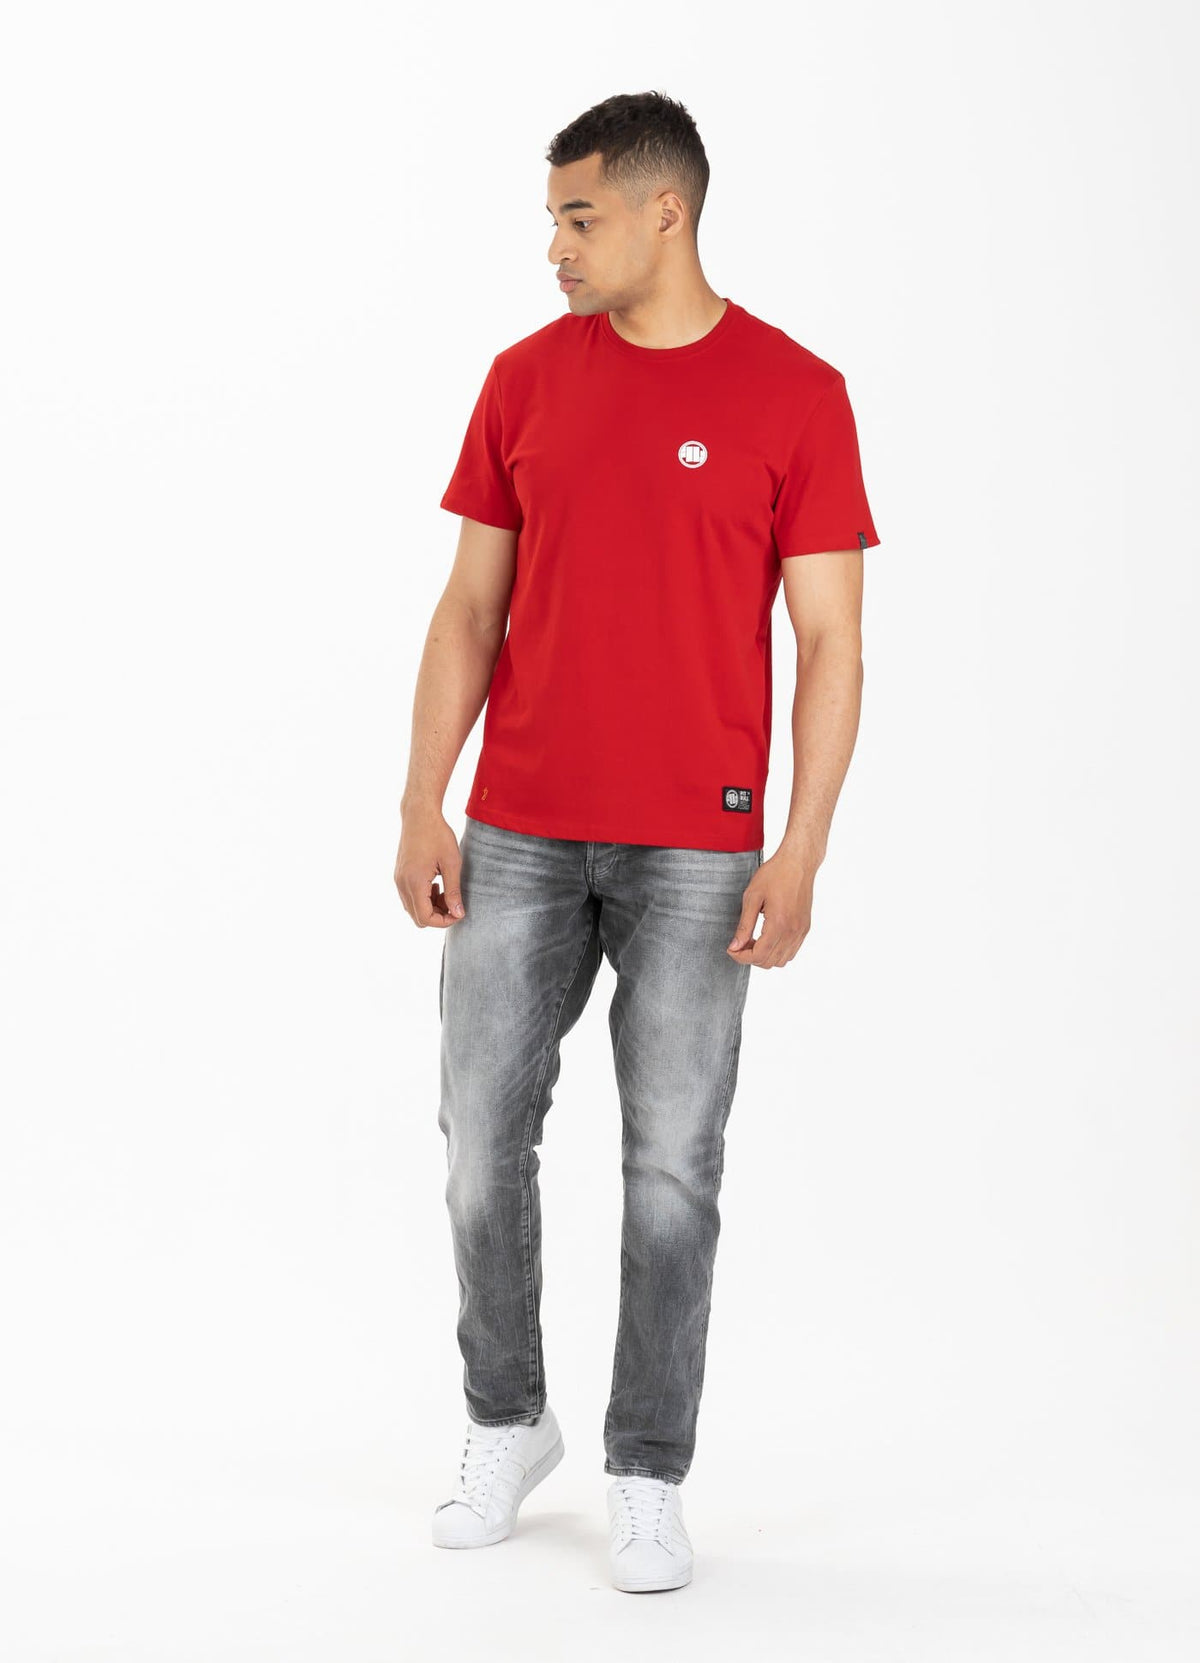 T-Shirt SMALL LOGO 21 Red - Pitbull West Coast International Store 